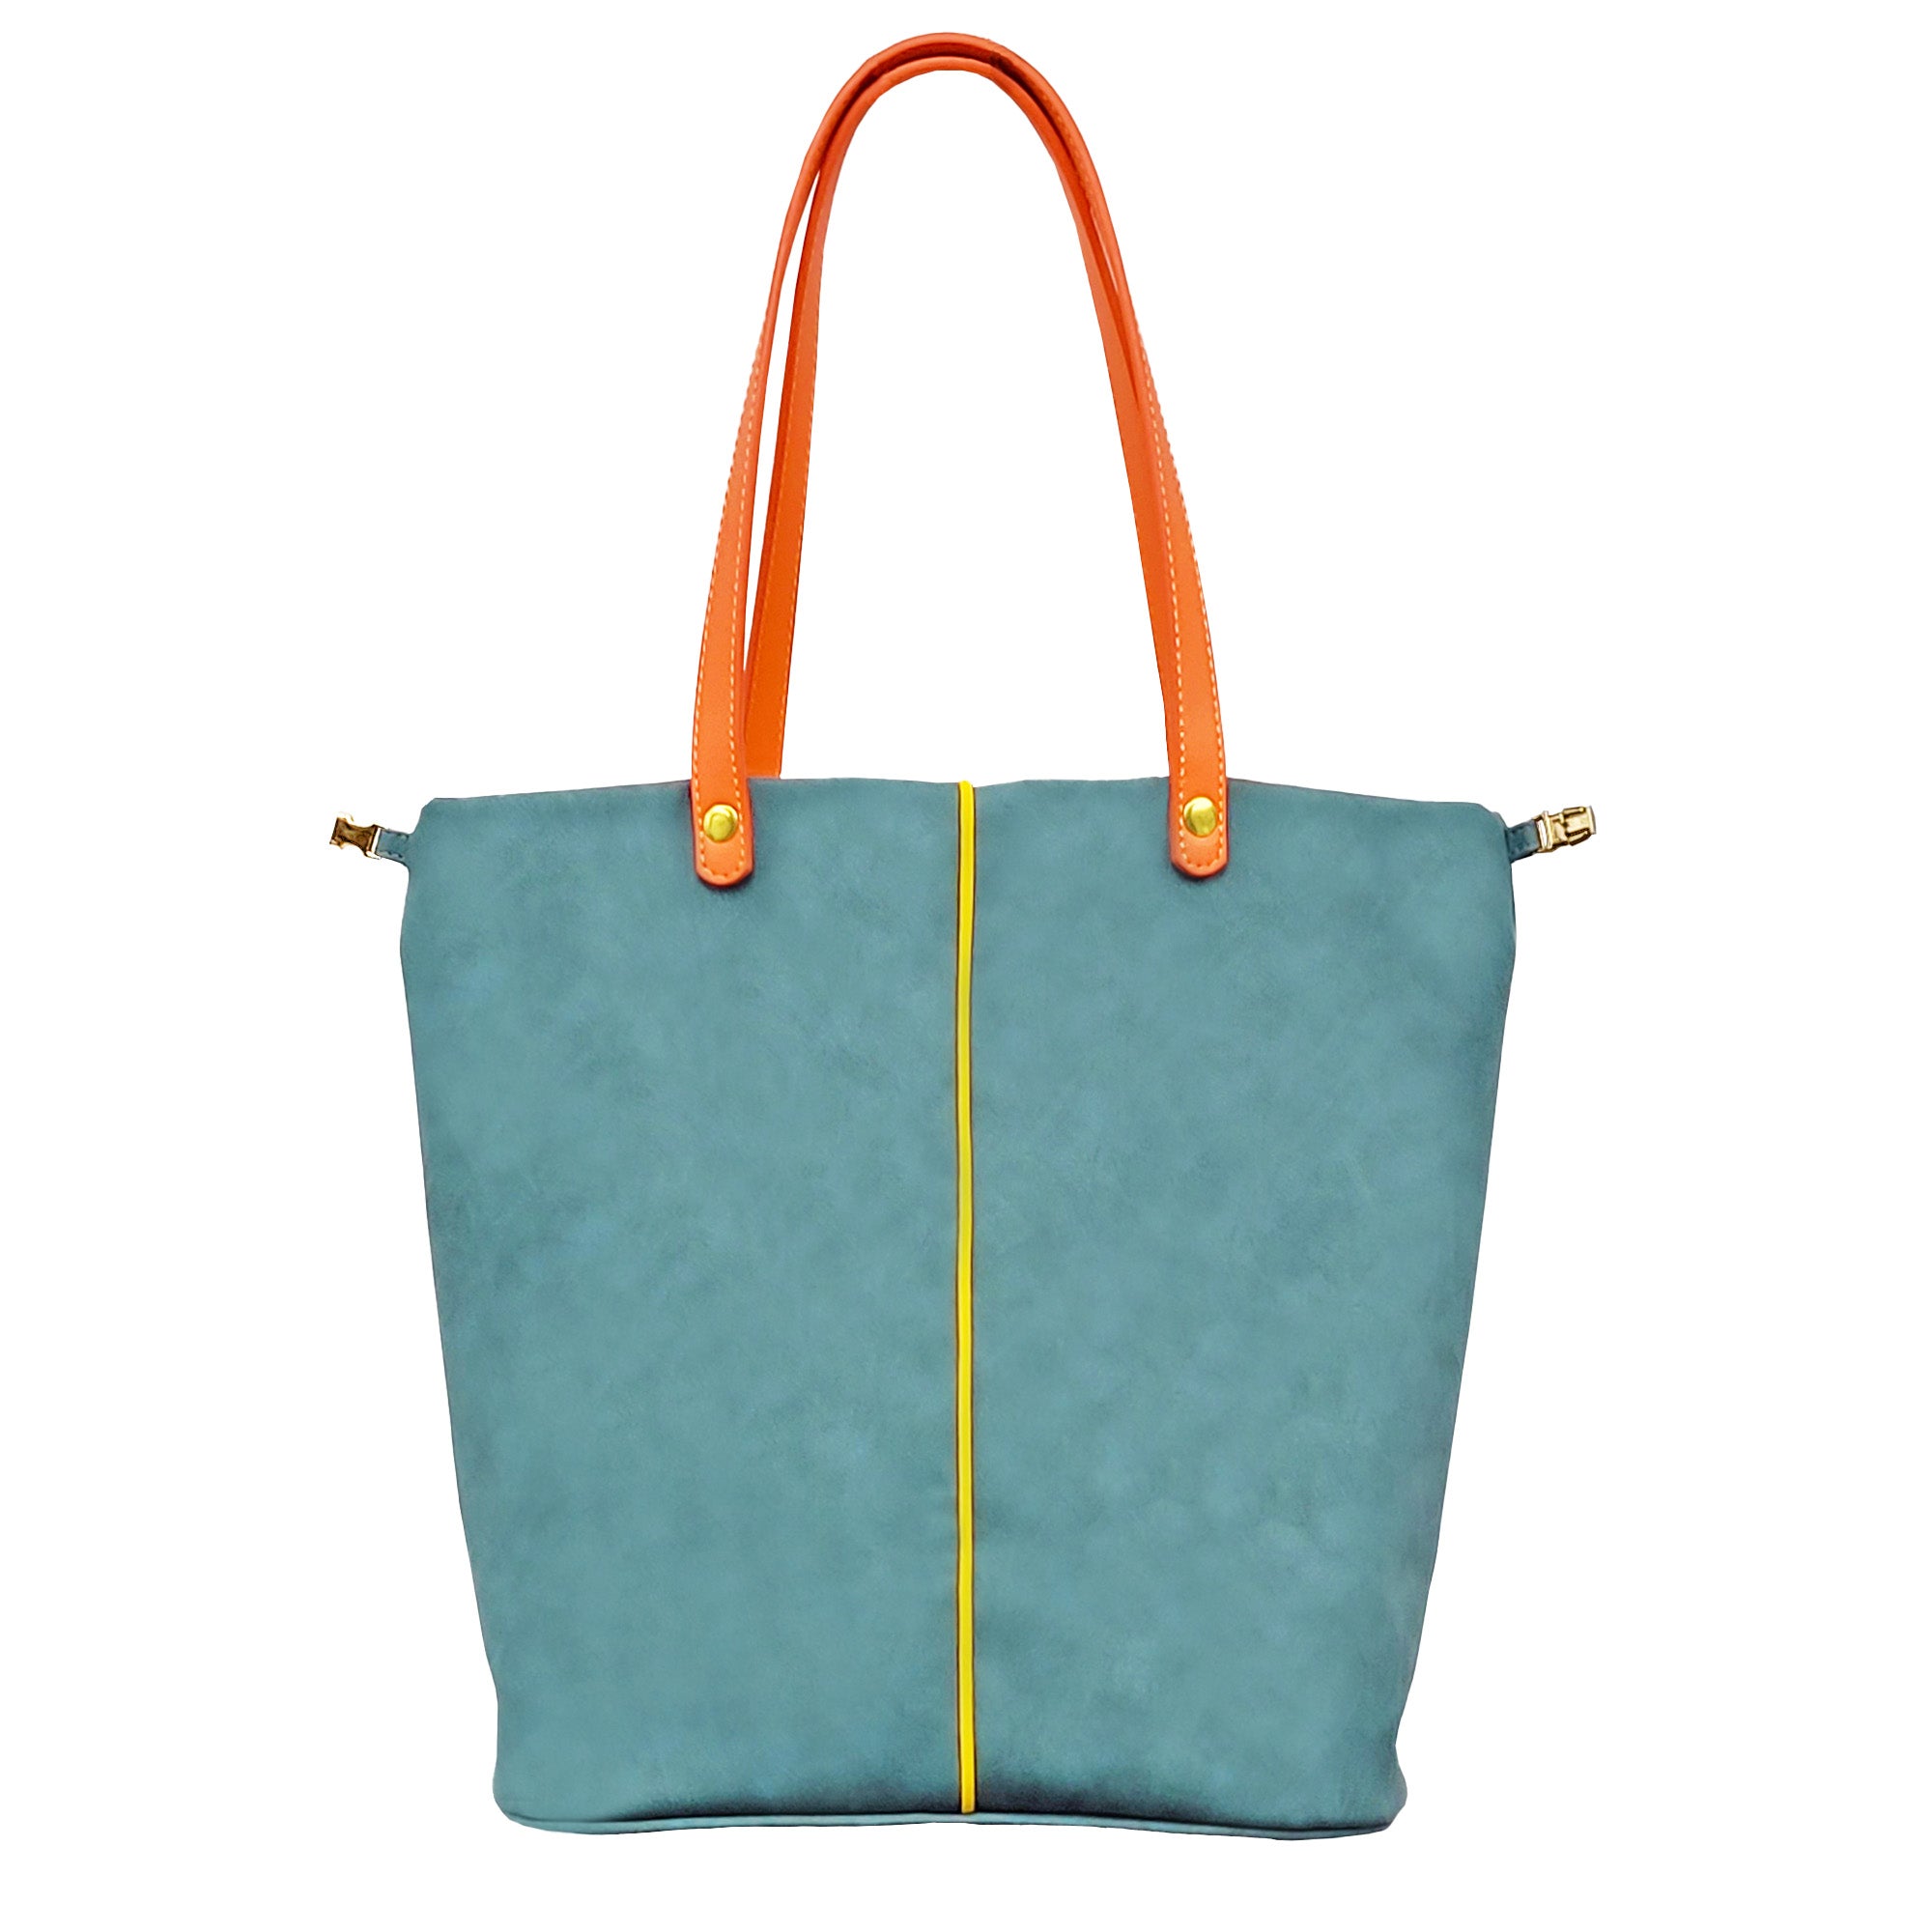 Two-tone Colour Shoulder bag - Turquoise - Women's Tote Bag